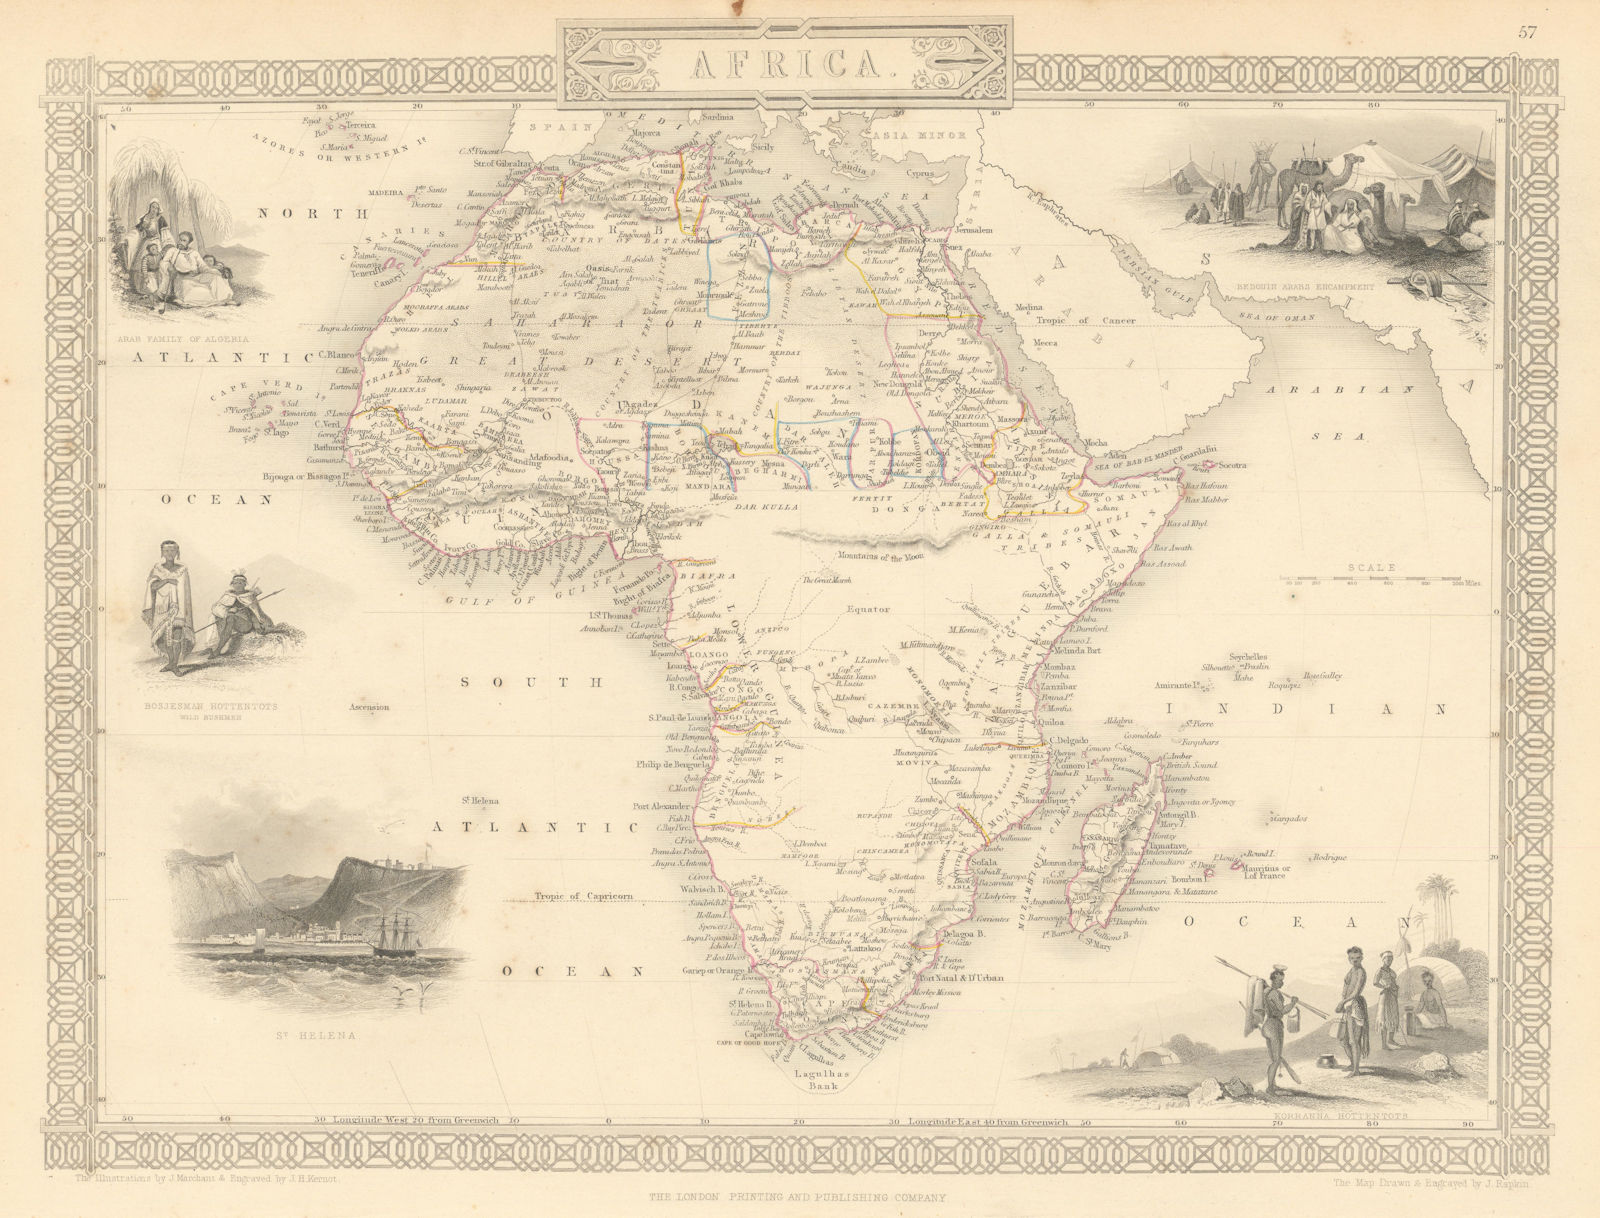 AFRICA. Shows Mountains of Kong/the Moon. Caravan routes. RAPKIN/TALLIS 1851 map